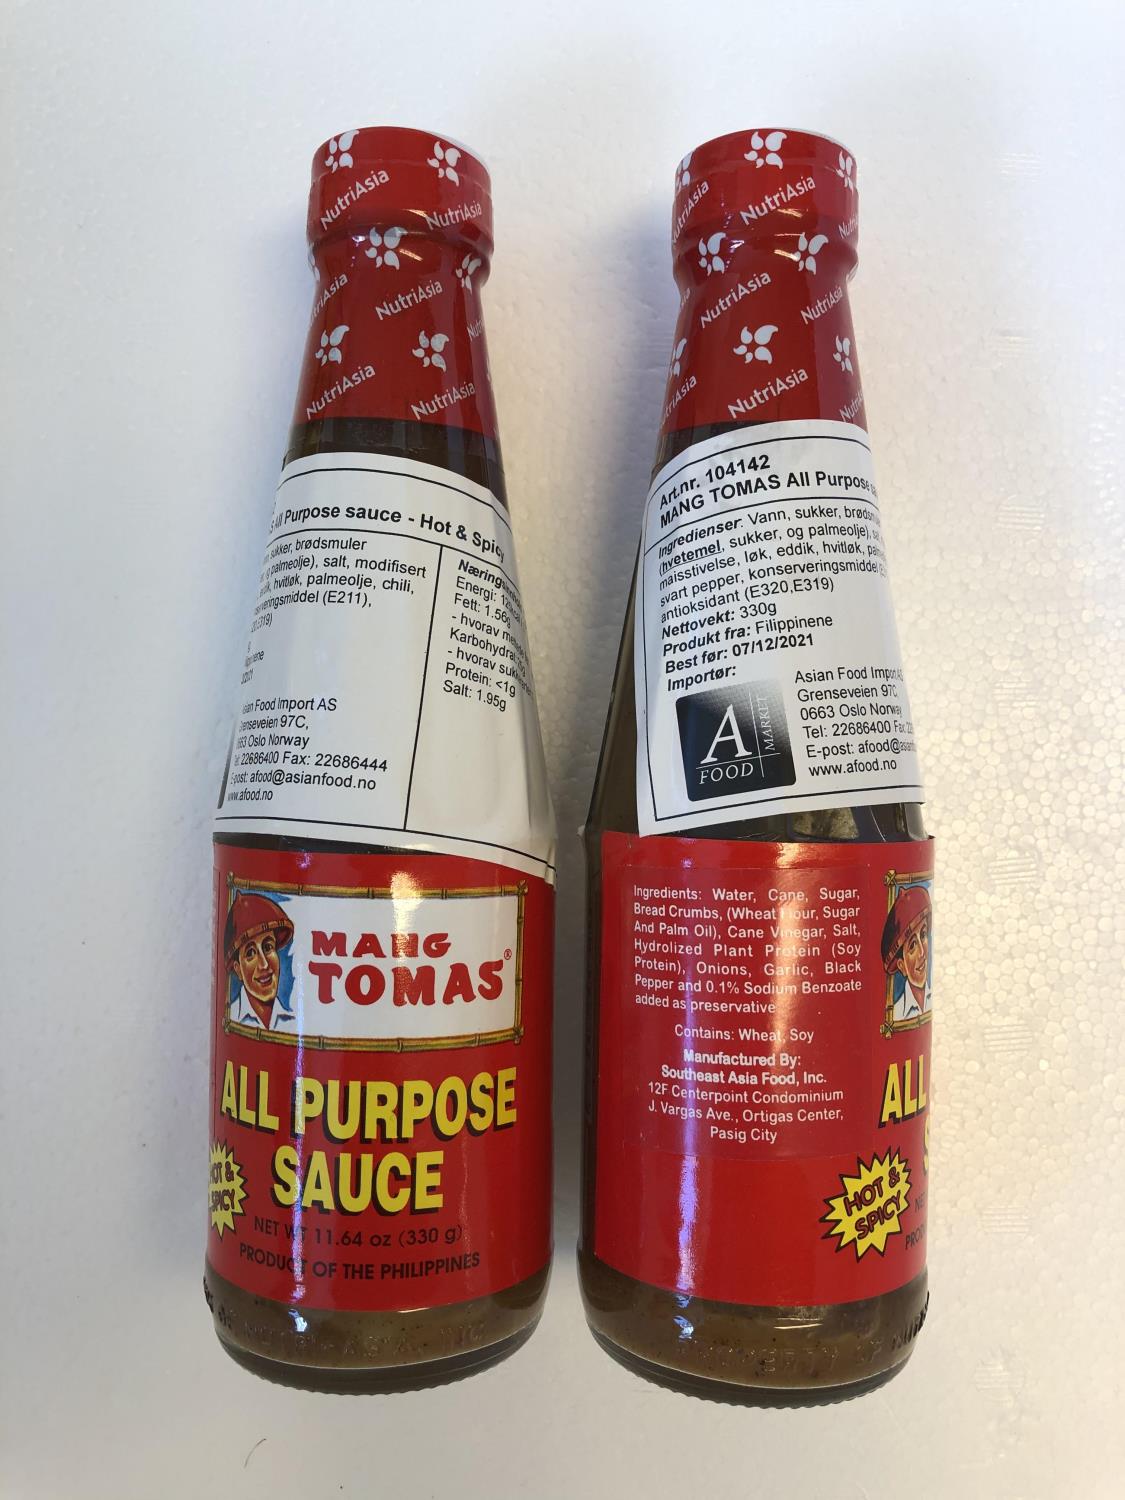 MANG TOMAS All Purpose Sauce Hot & Spicy 330ml